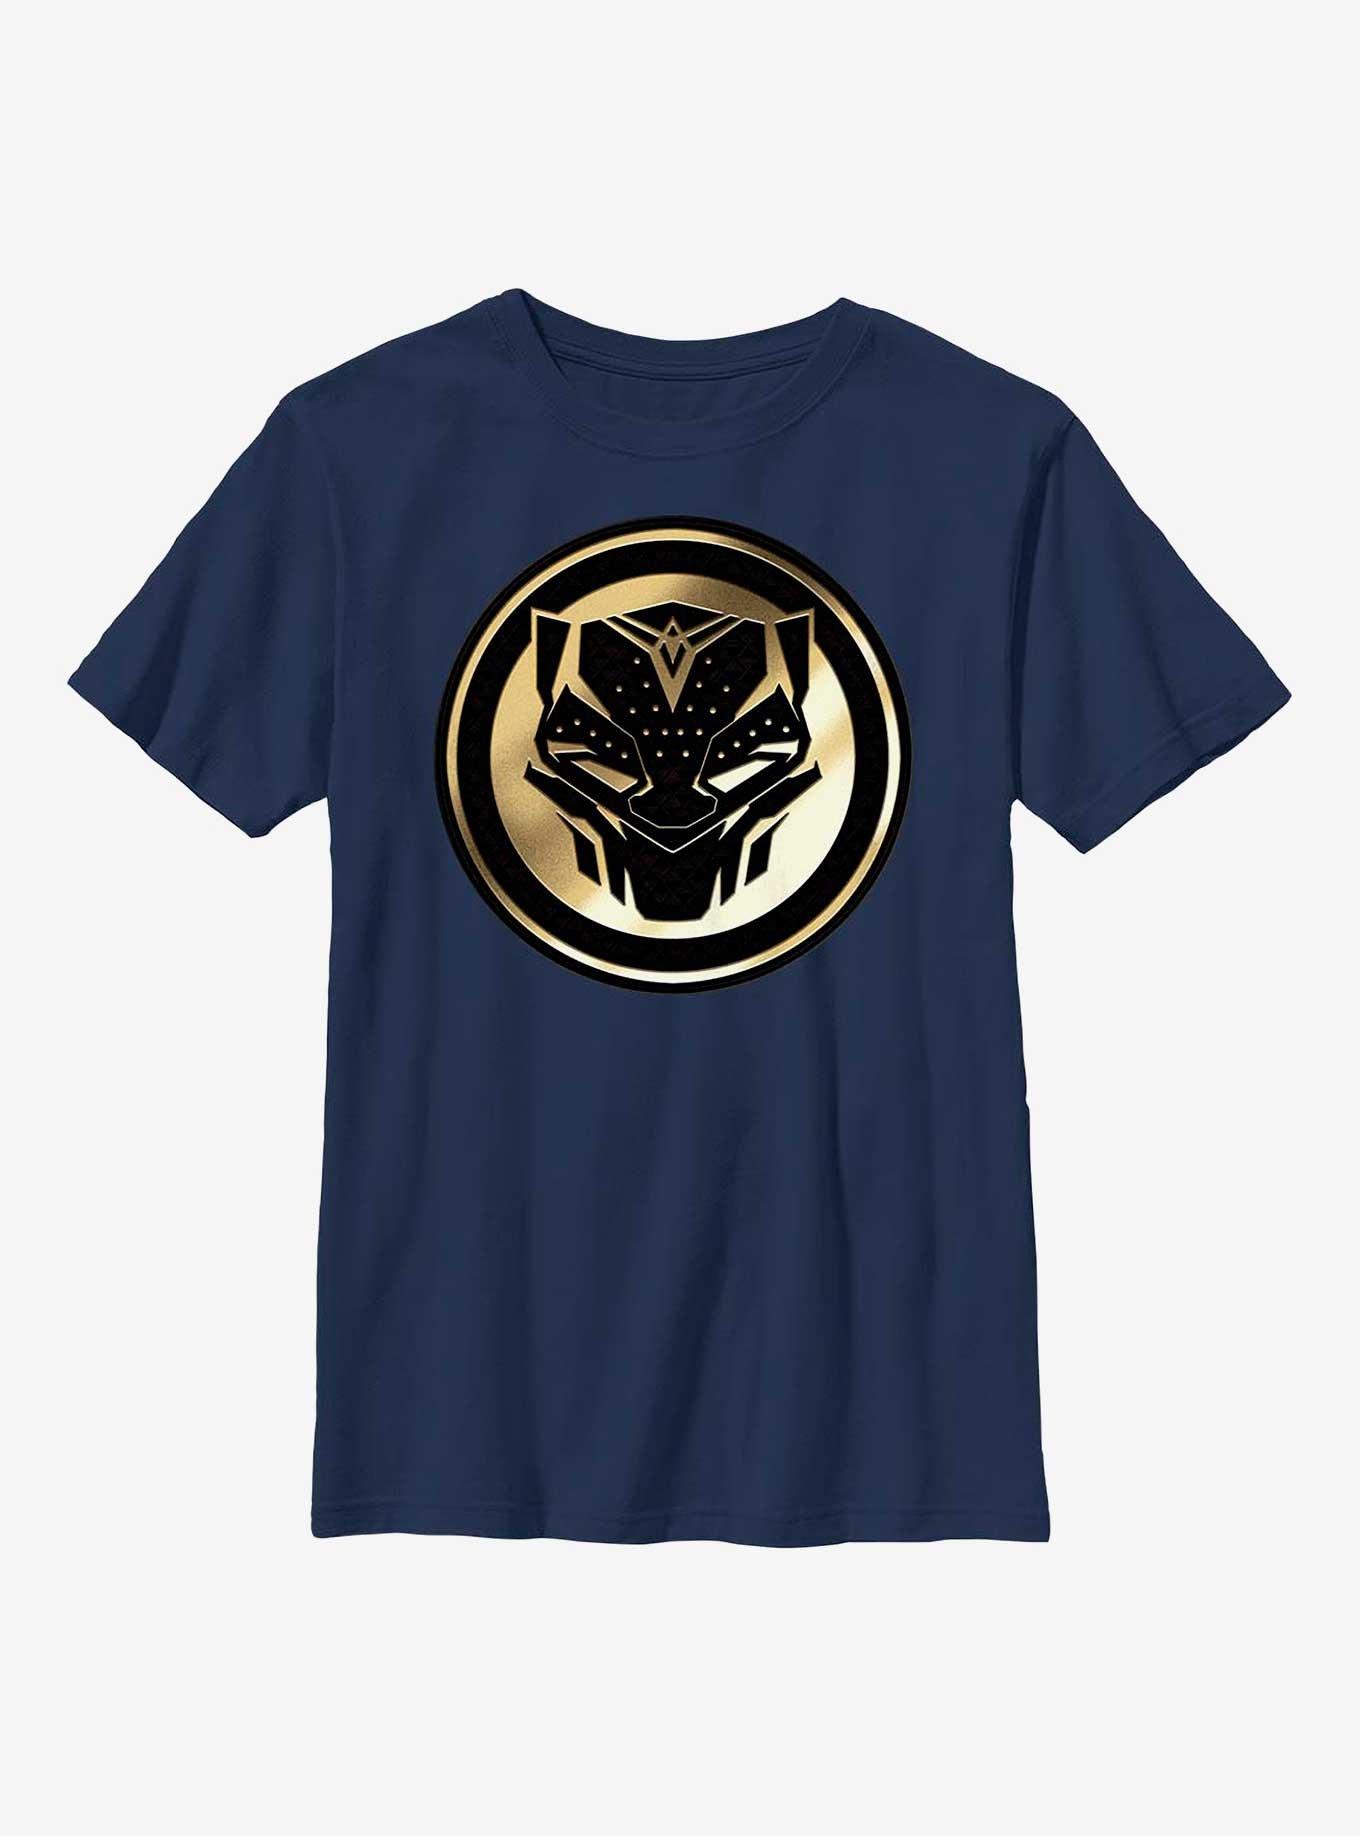 Marvel Black Panther: Wakanda Forever Golden Emblem Youth T-Shirt, NAVY, hi-res